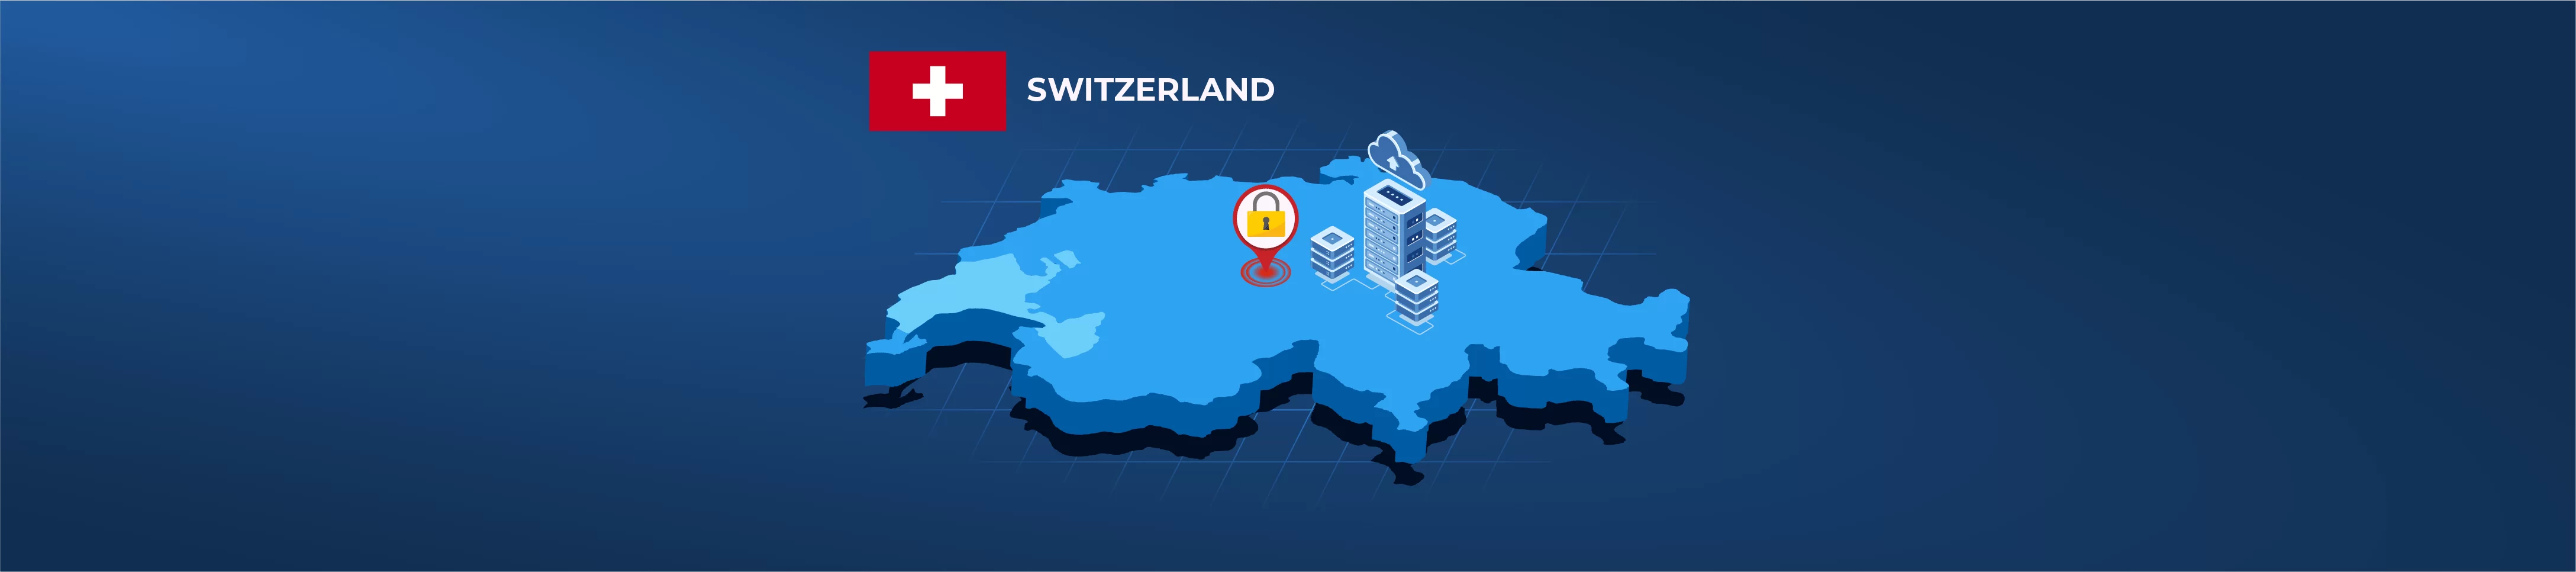 Illustration representing IT infrastructure in Switzerland